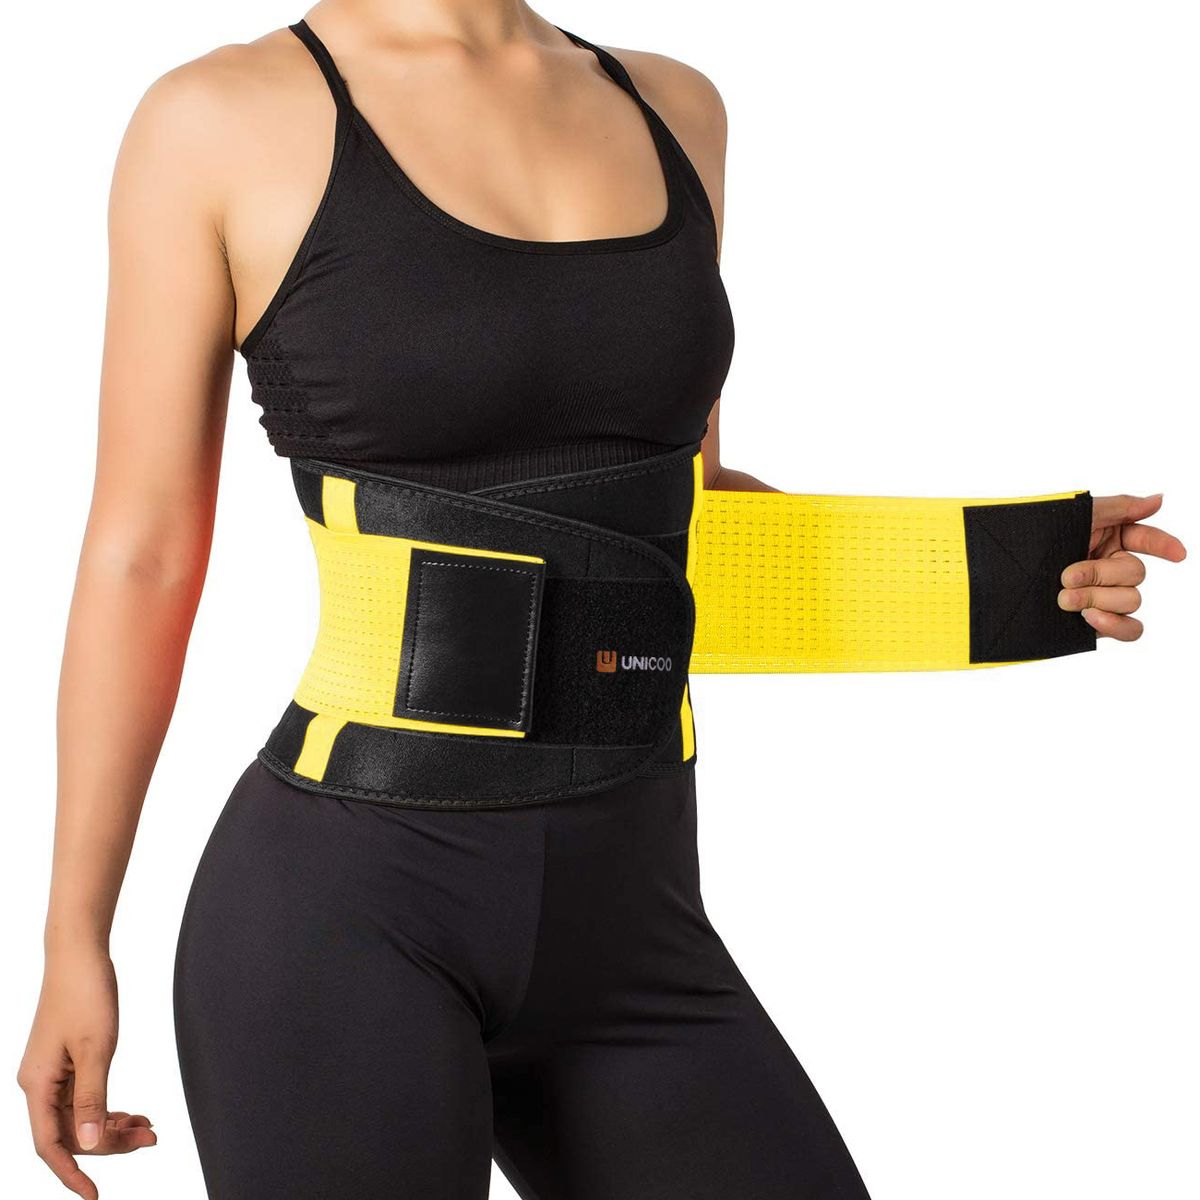 Unicoo Instant Slim Body Shaper & Waist Trainer Belt - Red, Shop Today.  Get it Tomorrow!